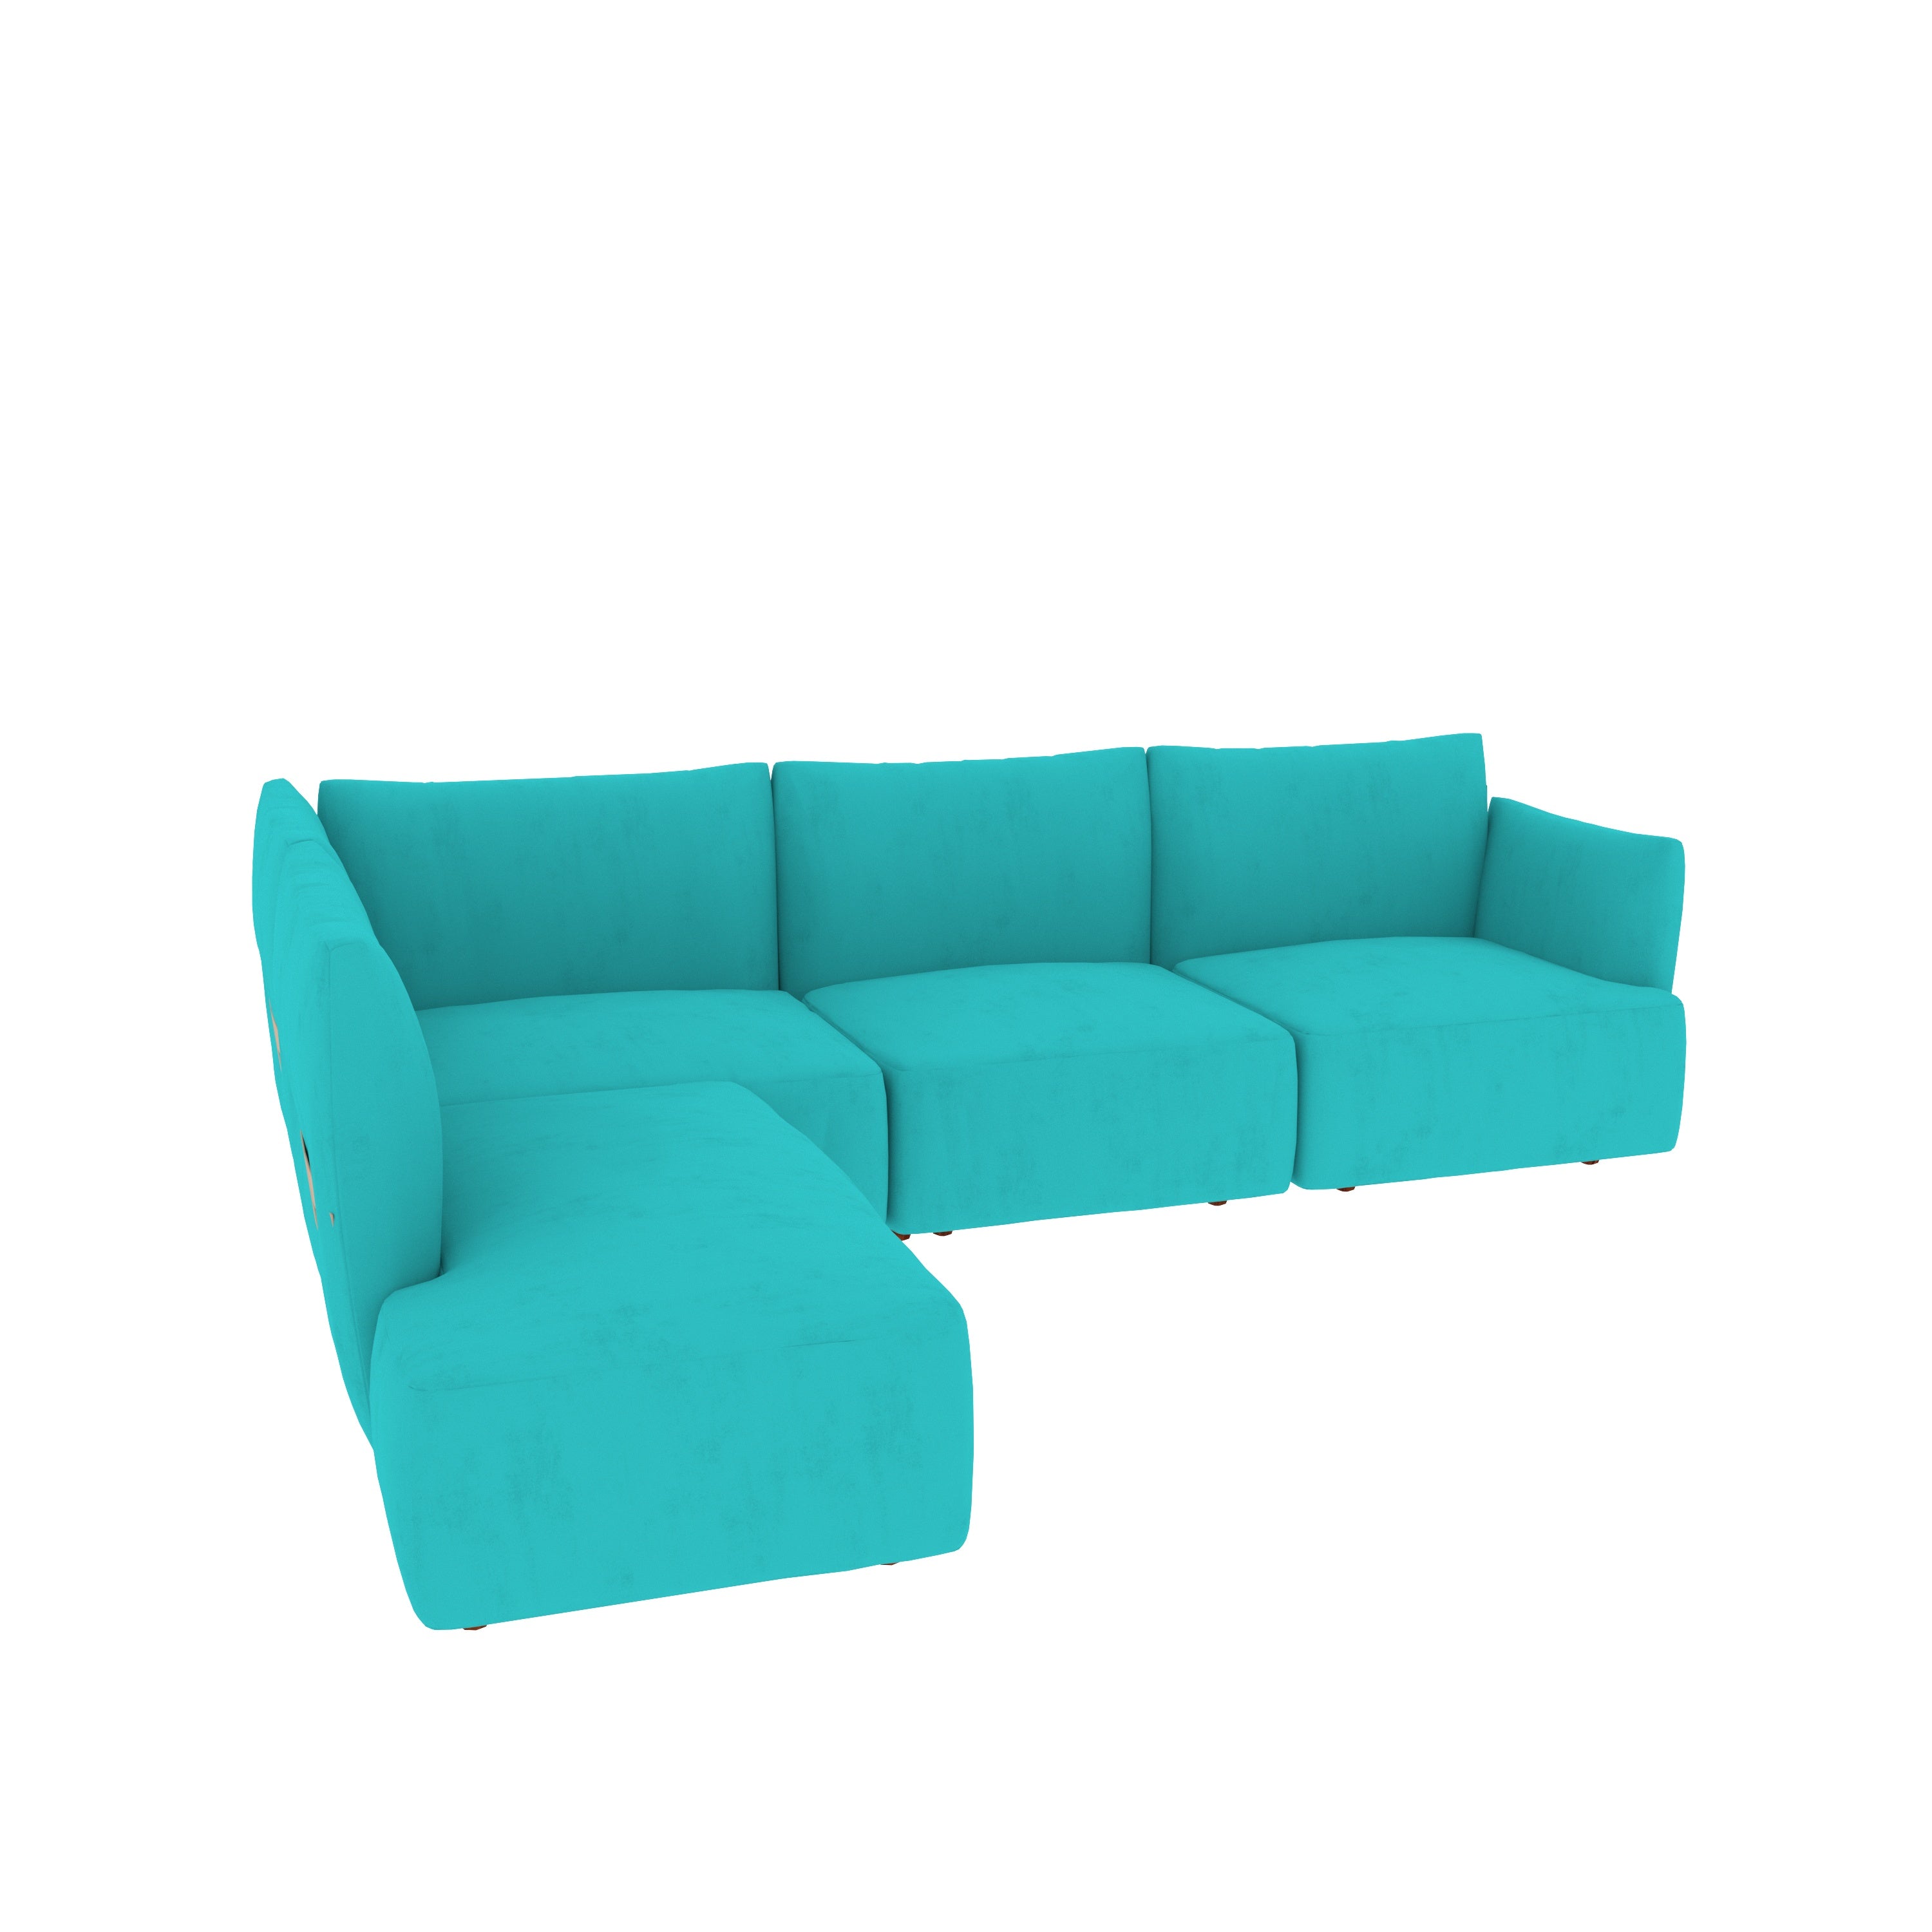 Aqua Cyan Pastel Coloured with Premium Comfort L Shaped 4 Seater Sofa Set for Home Sofa